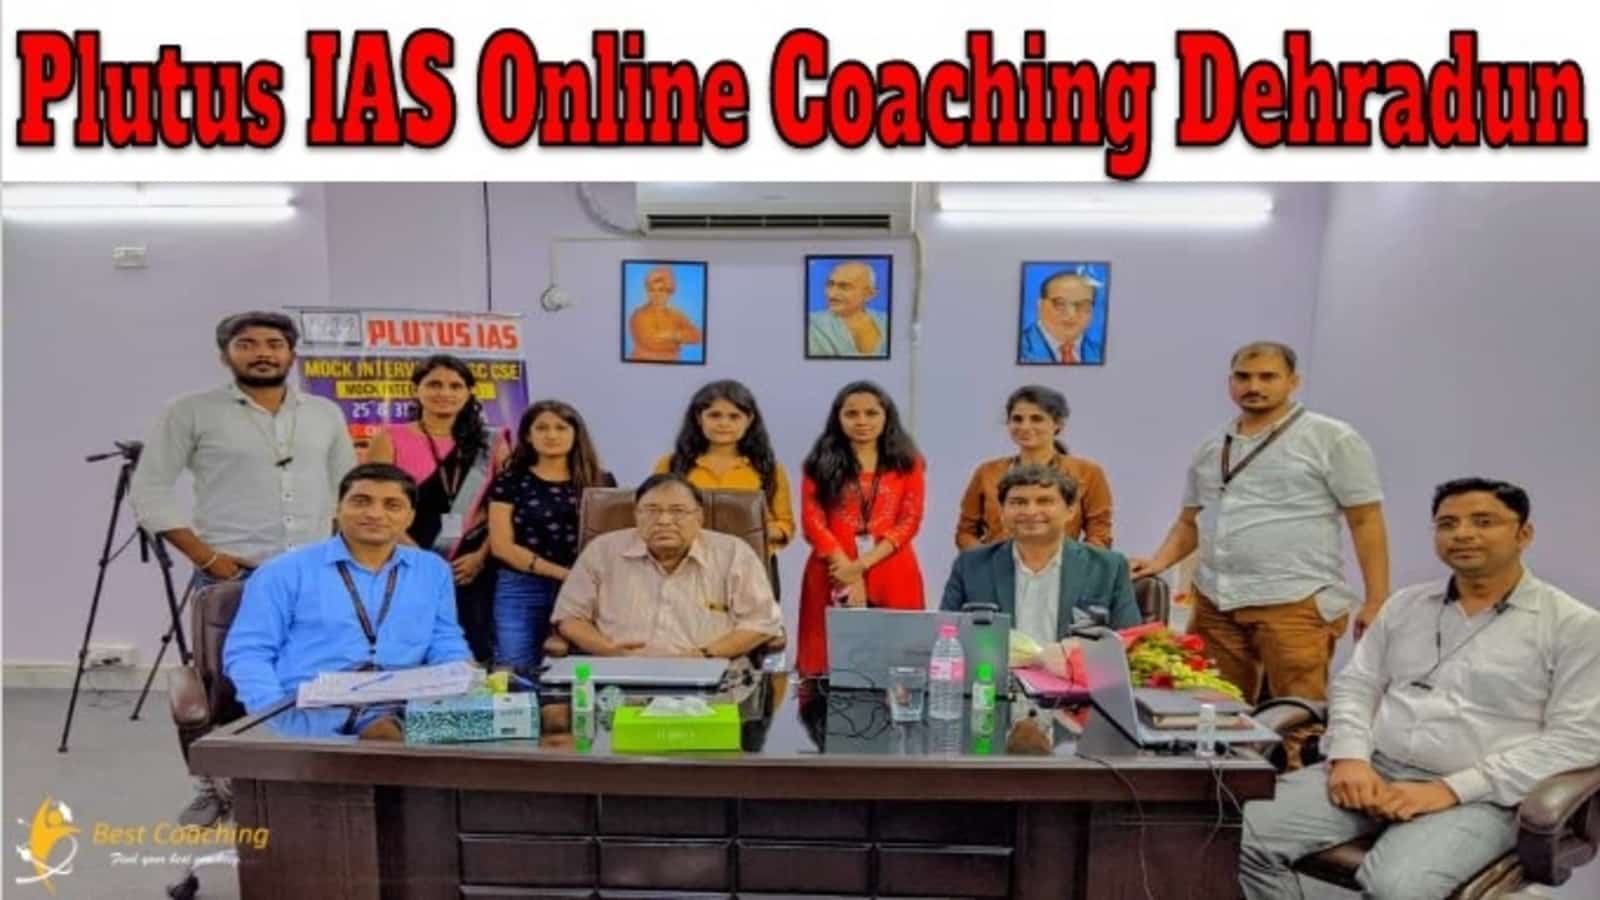 Plutus IAS Online Coaching Dehradun